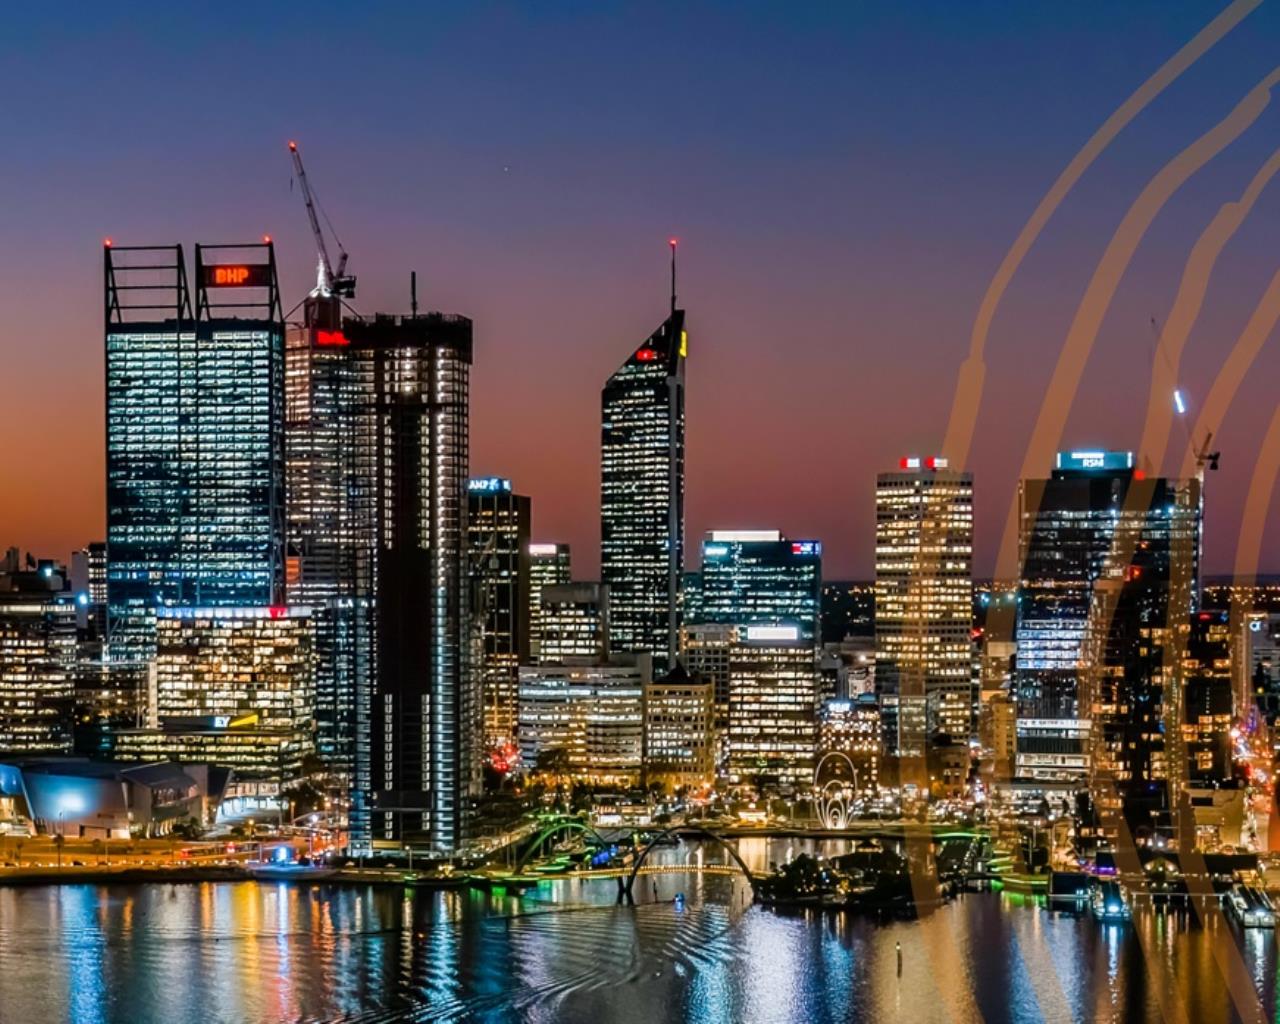 Perth City skyline at night